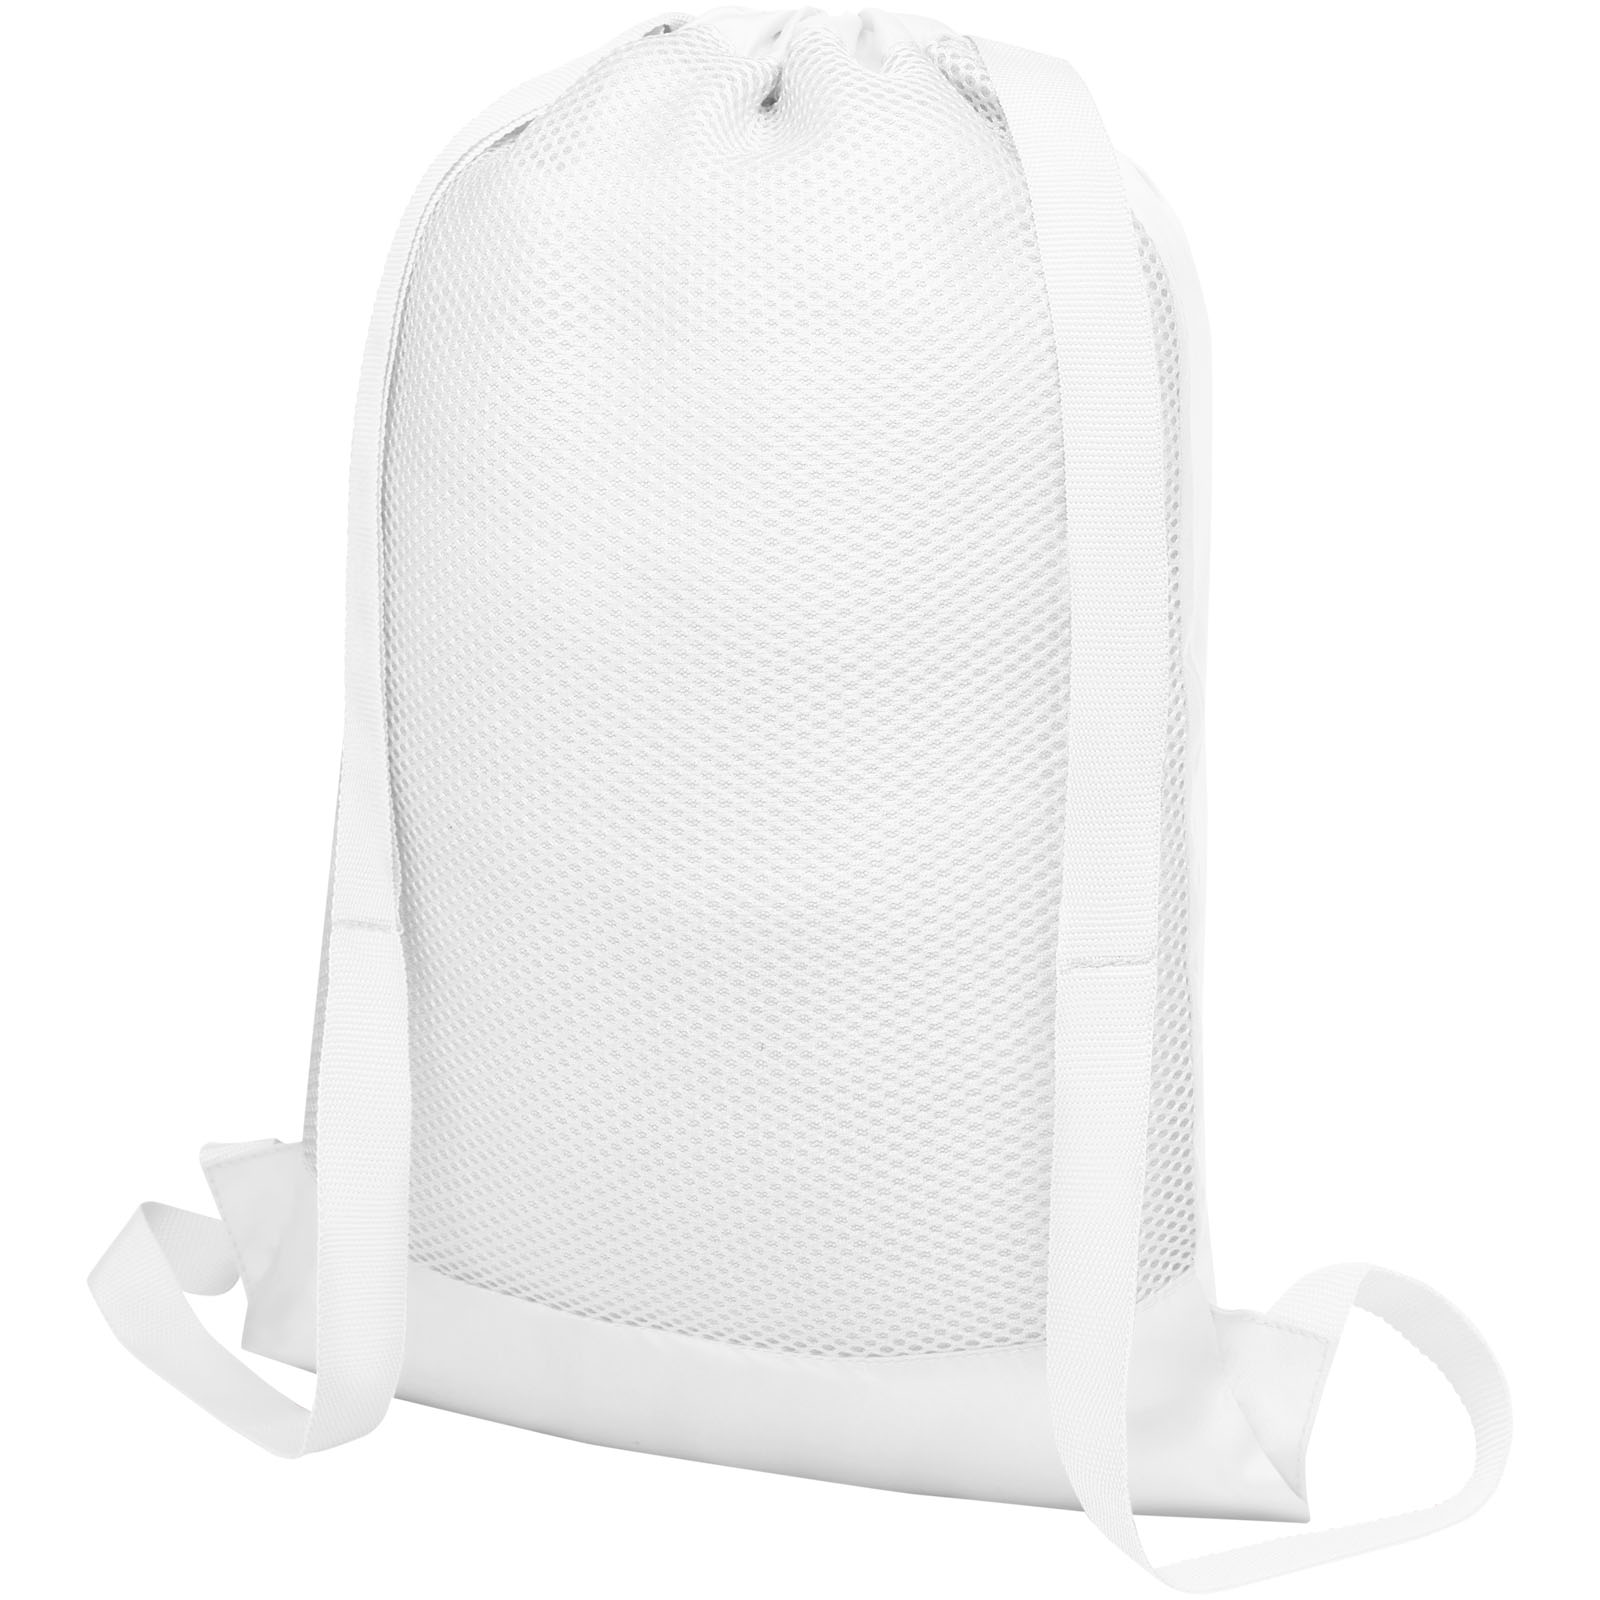 Drawstring Bags - Nadi mesh drawstring bag 5L